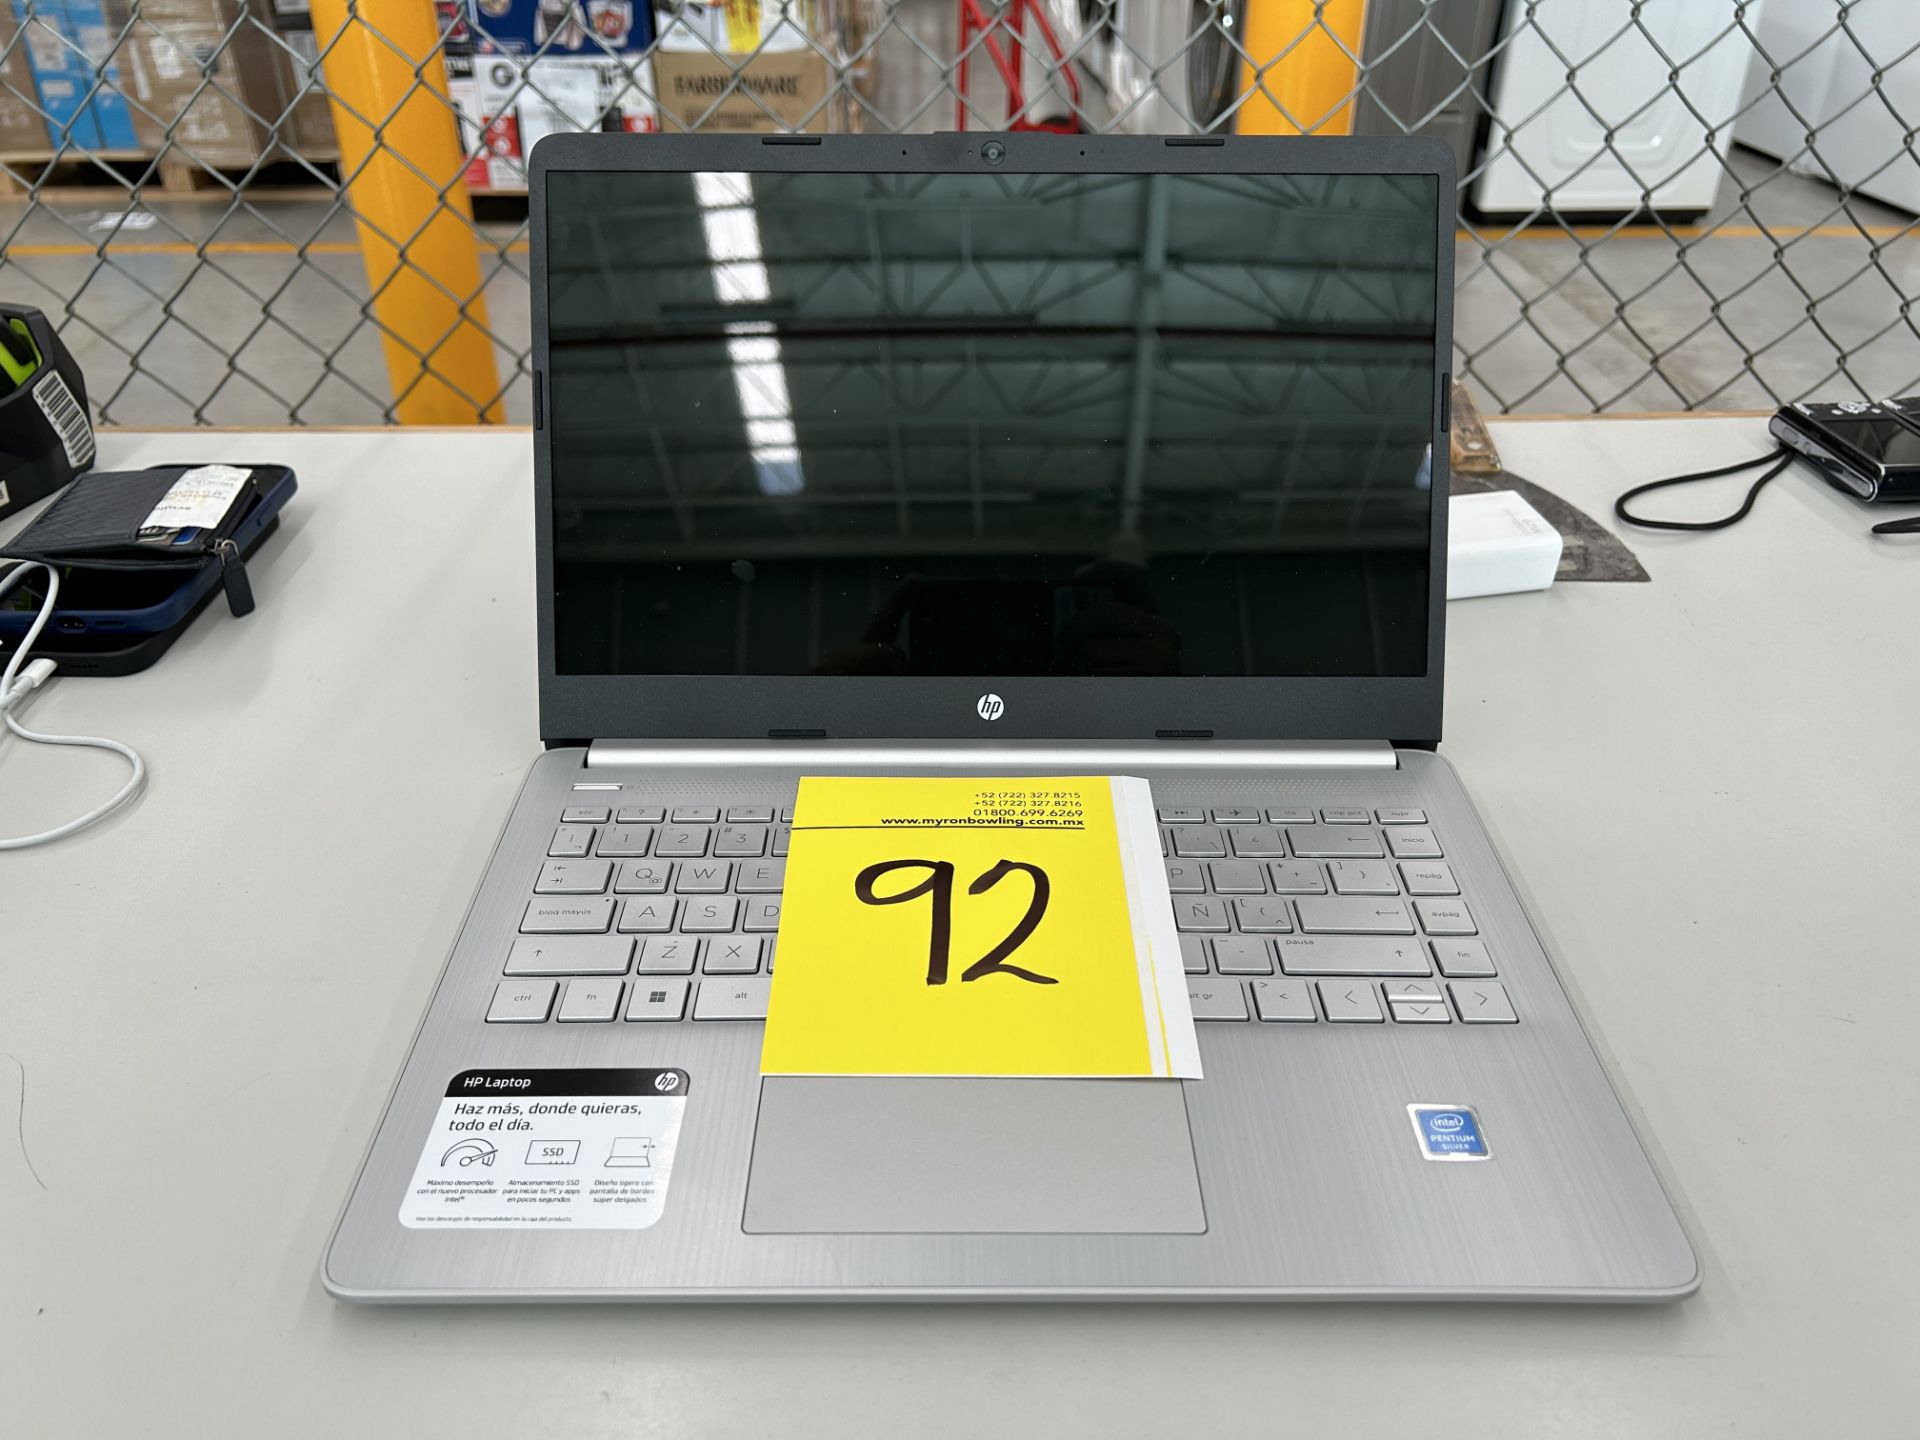 Lote de 2 Laptop Contiene: 1 Laptop Marca LANIX, Modelo NEURON FLEX, Serie 001470, 128 GB de Almace - Image 4 of 8